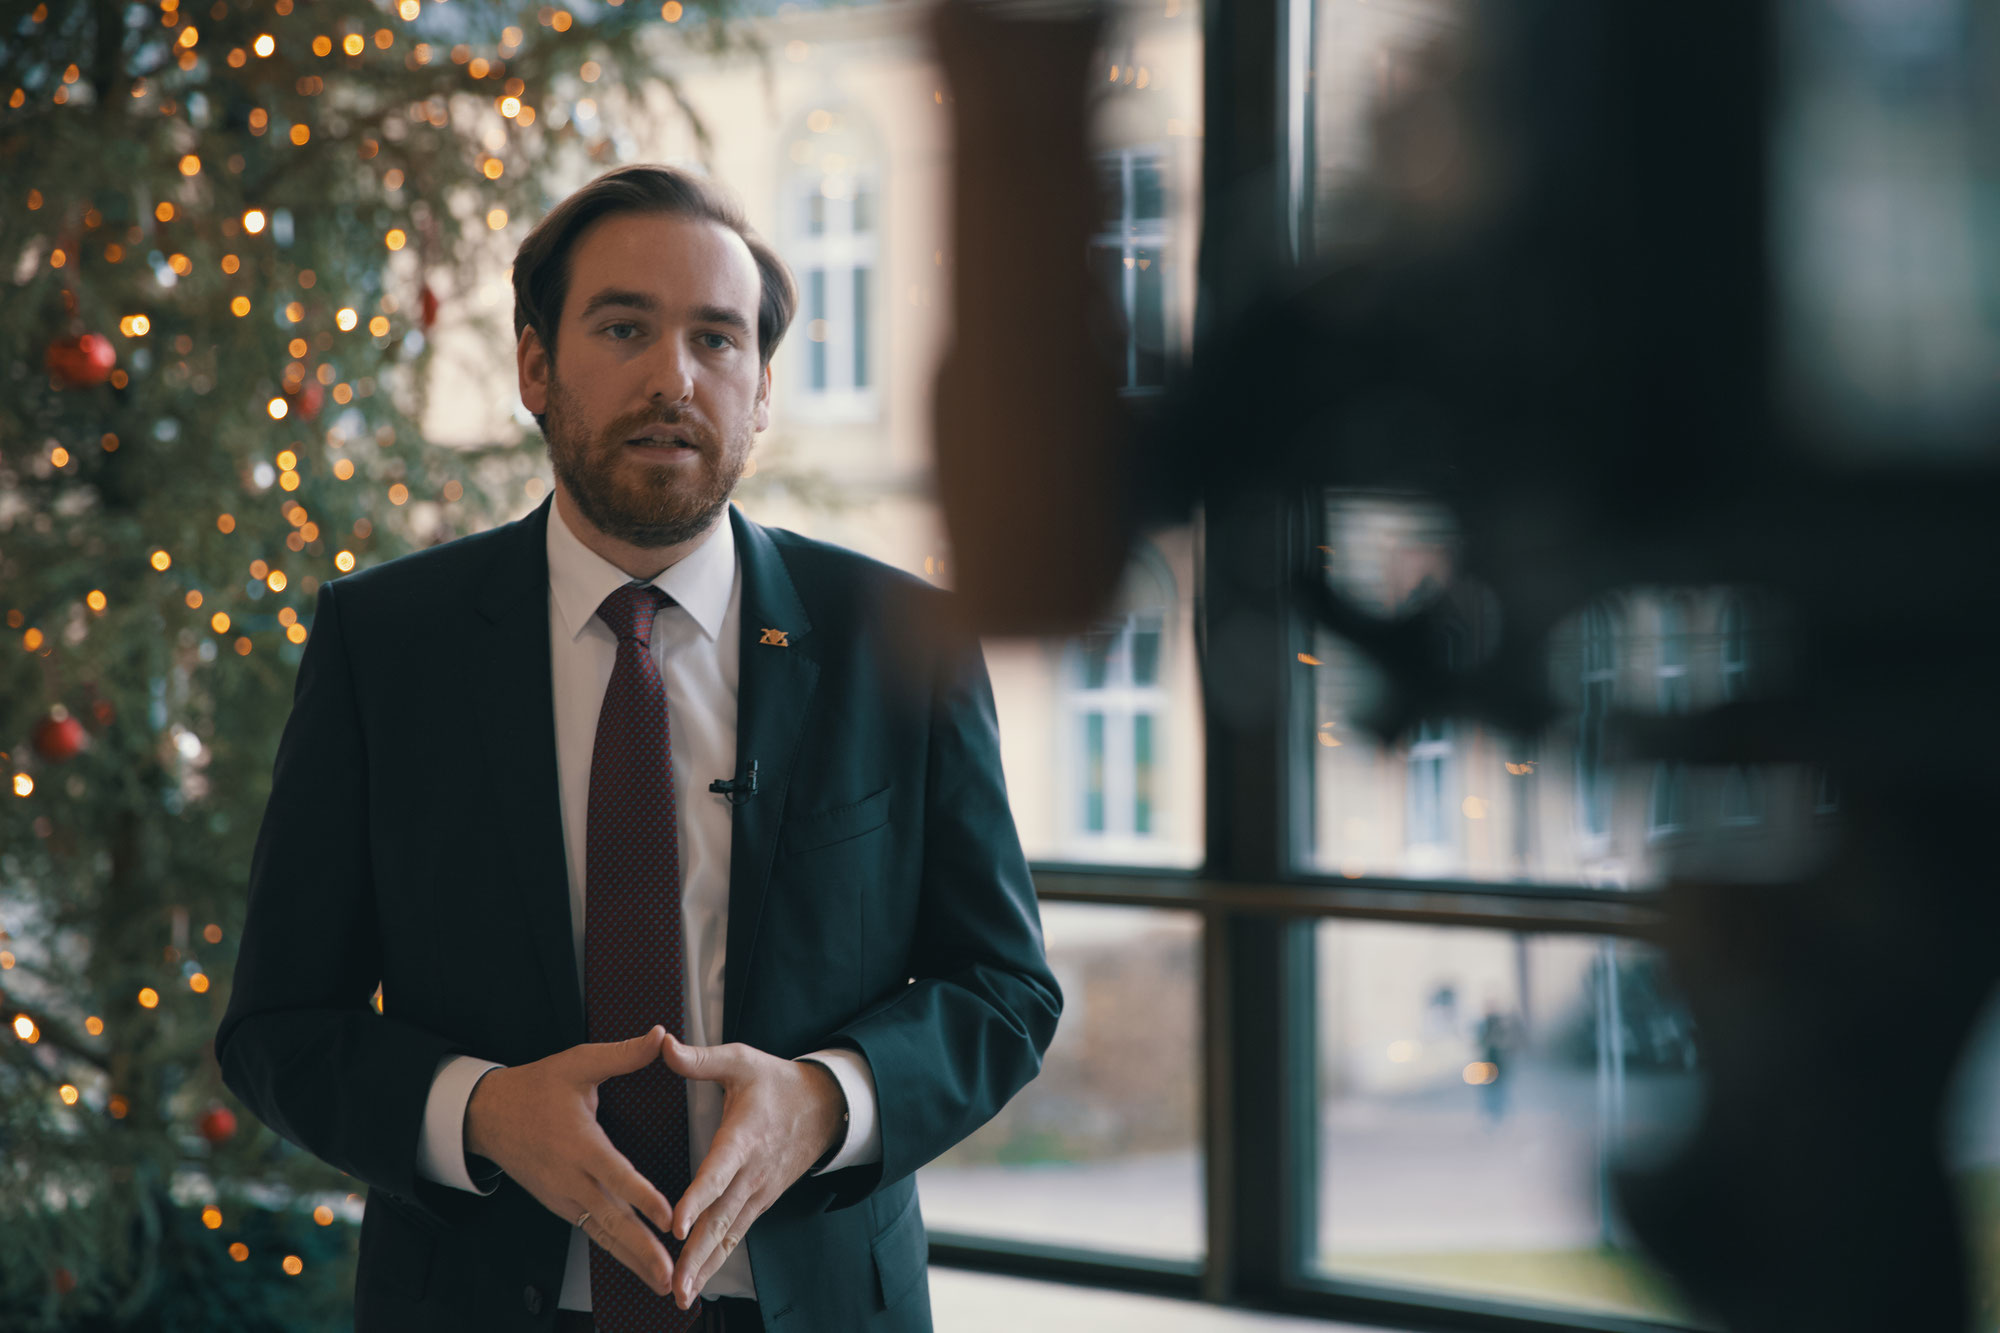 Profi-Aufnahme statt Selfie: Andreas Sturm MdL produziert Weihnachtsansprache